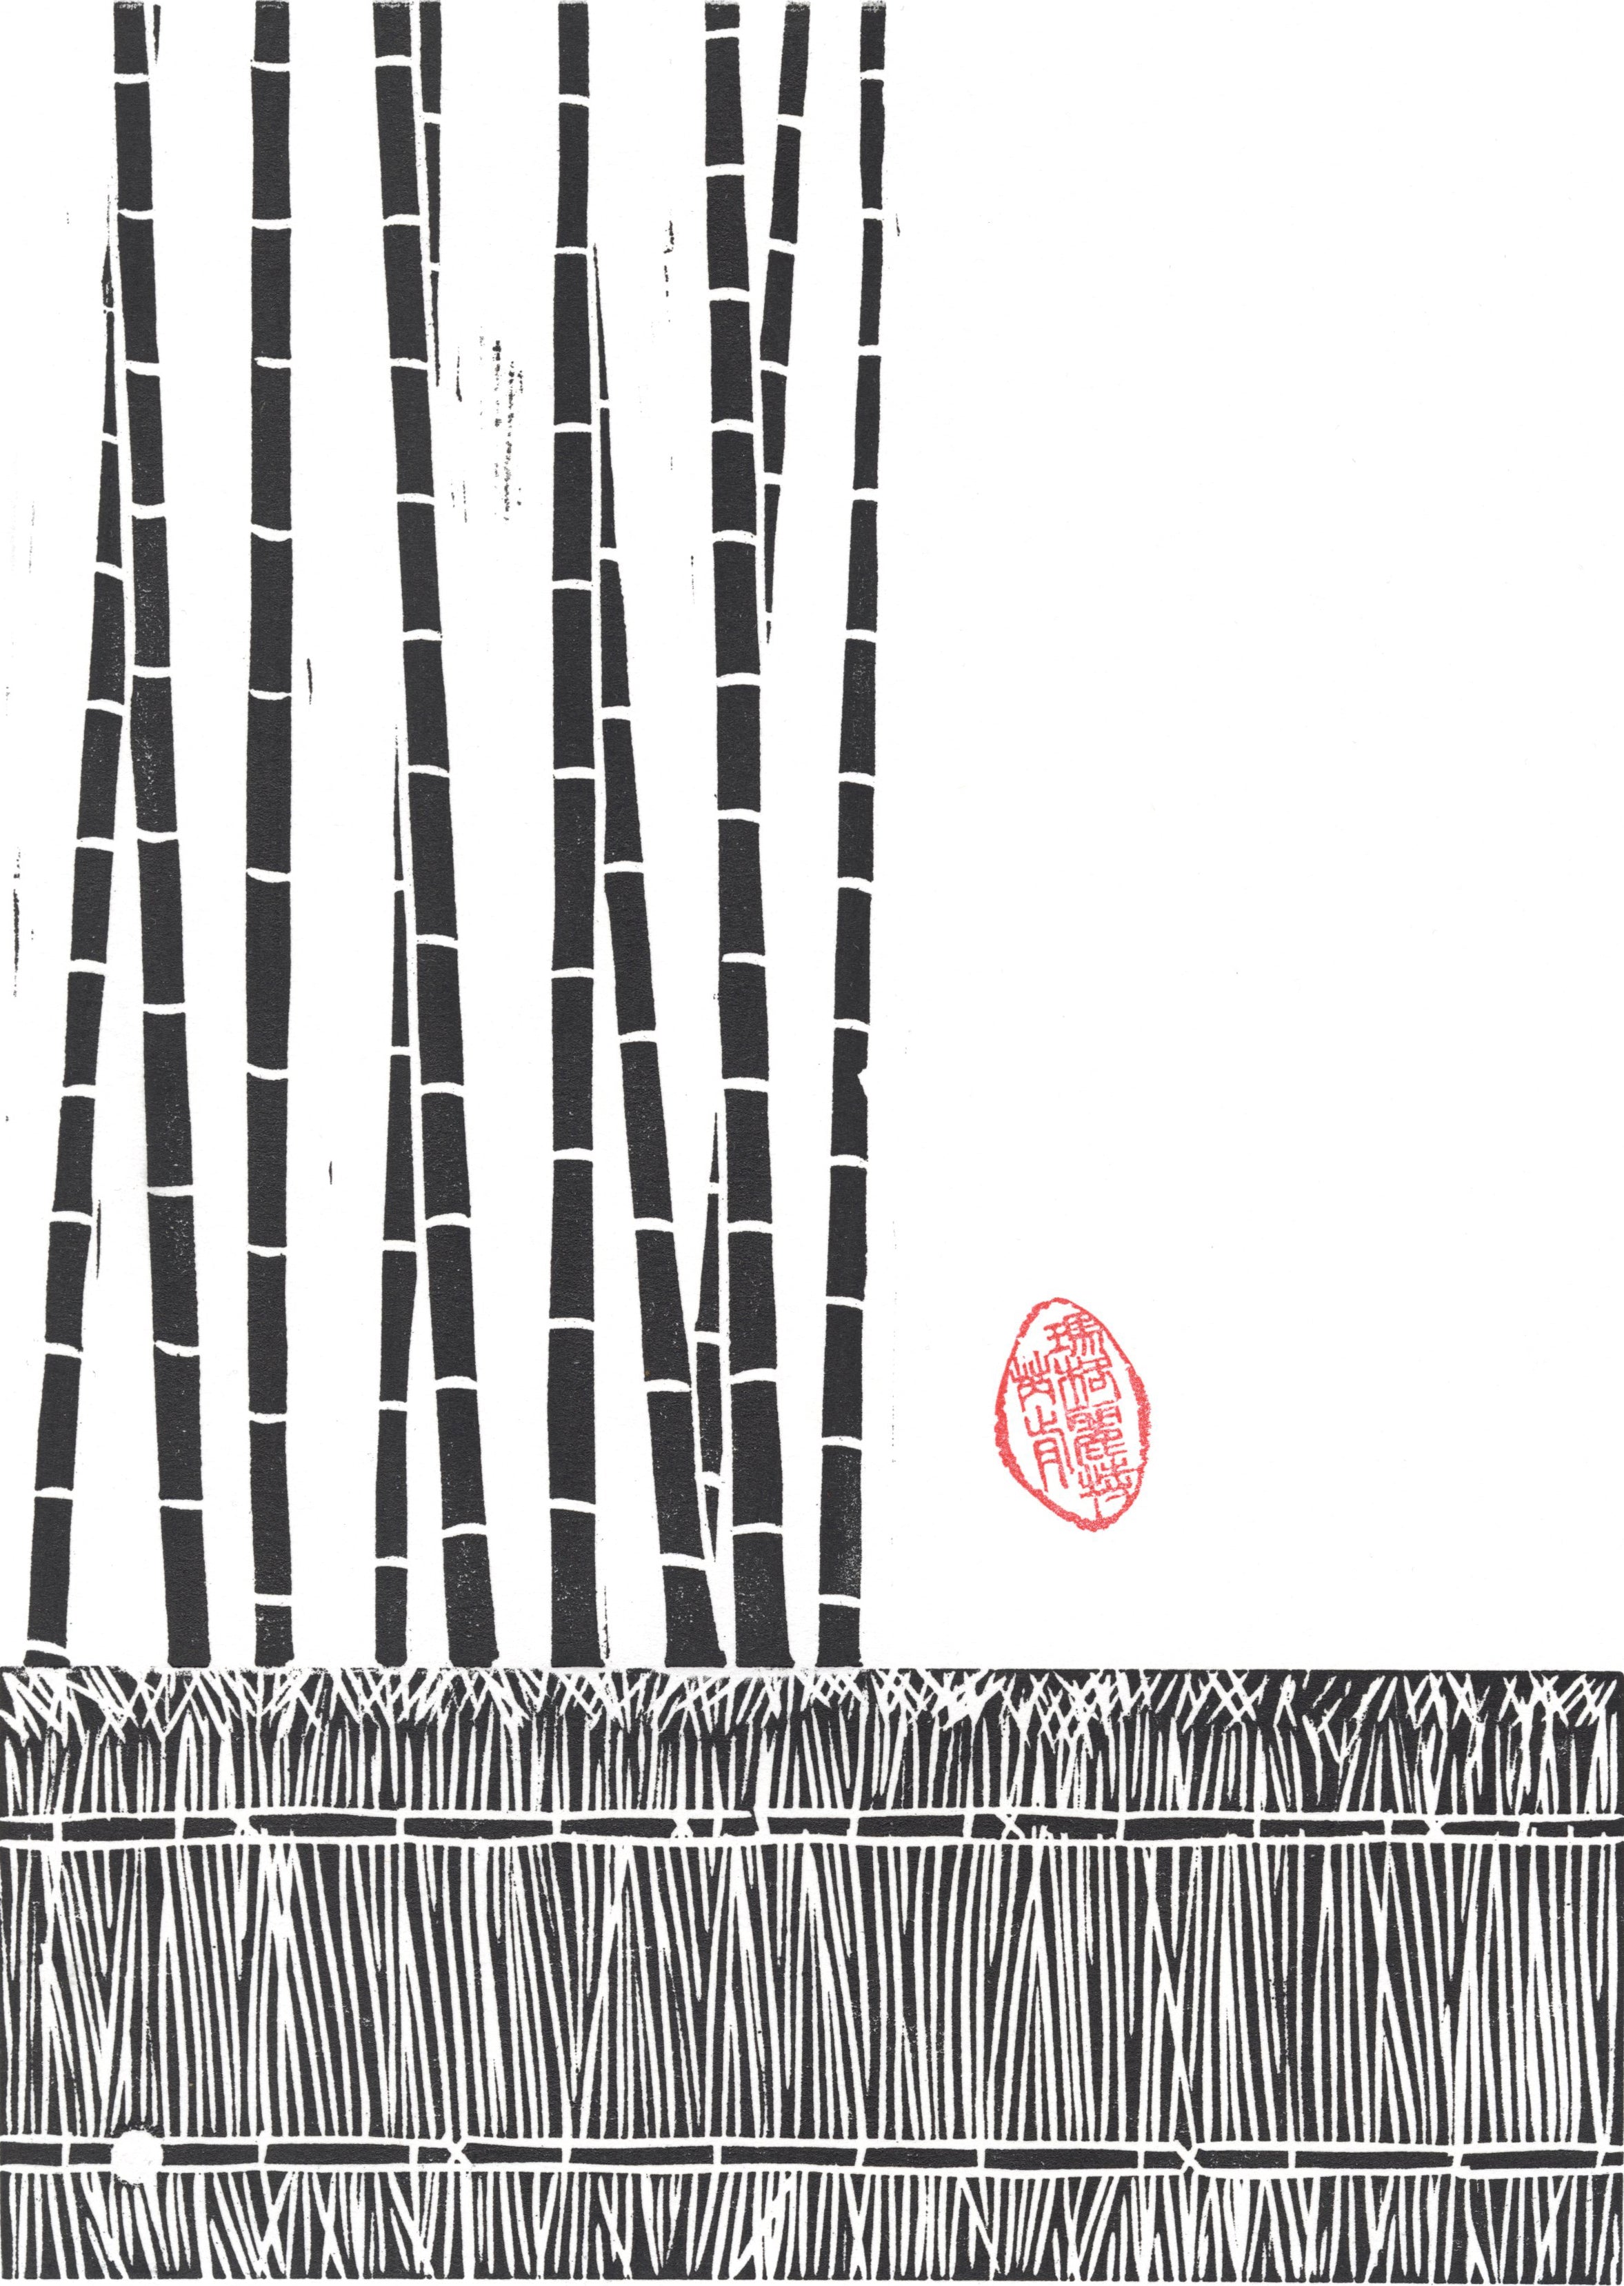 Bamboo & Woven Fence Linocut Print 9"x13"